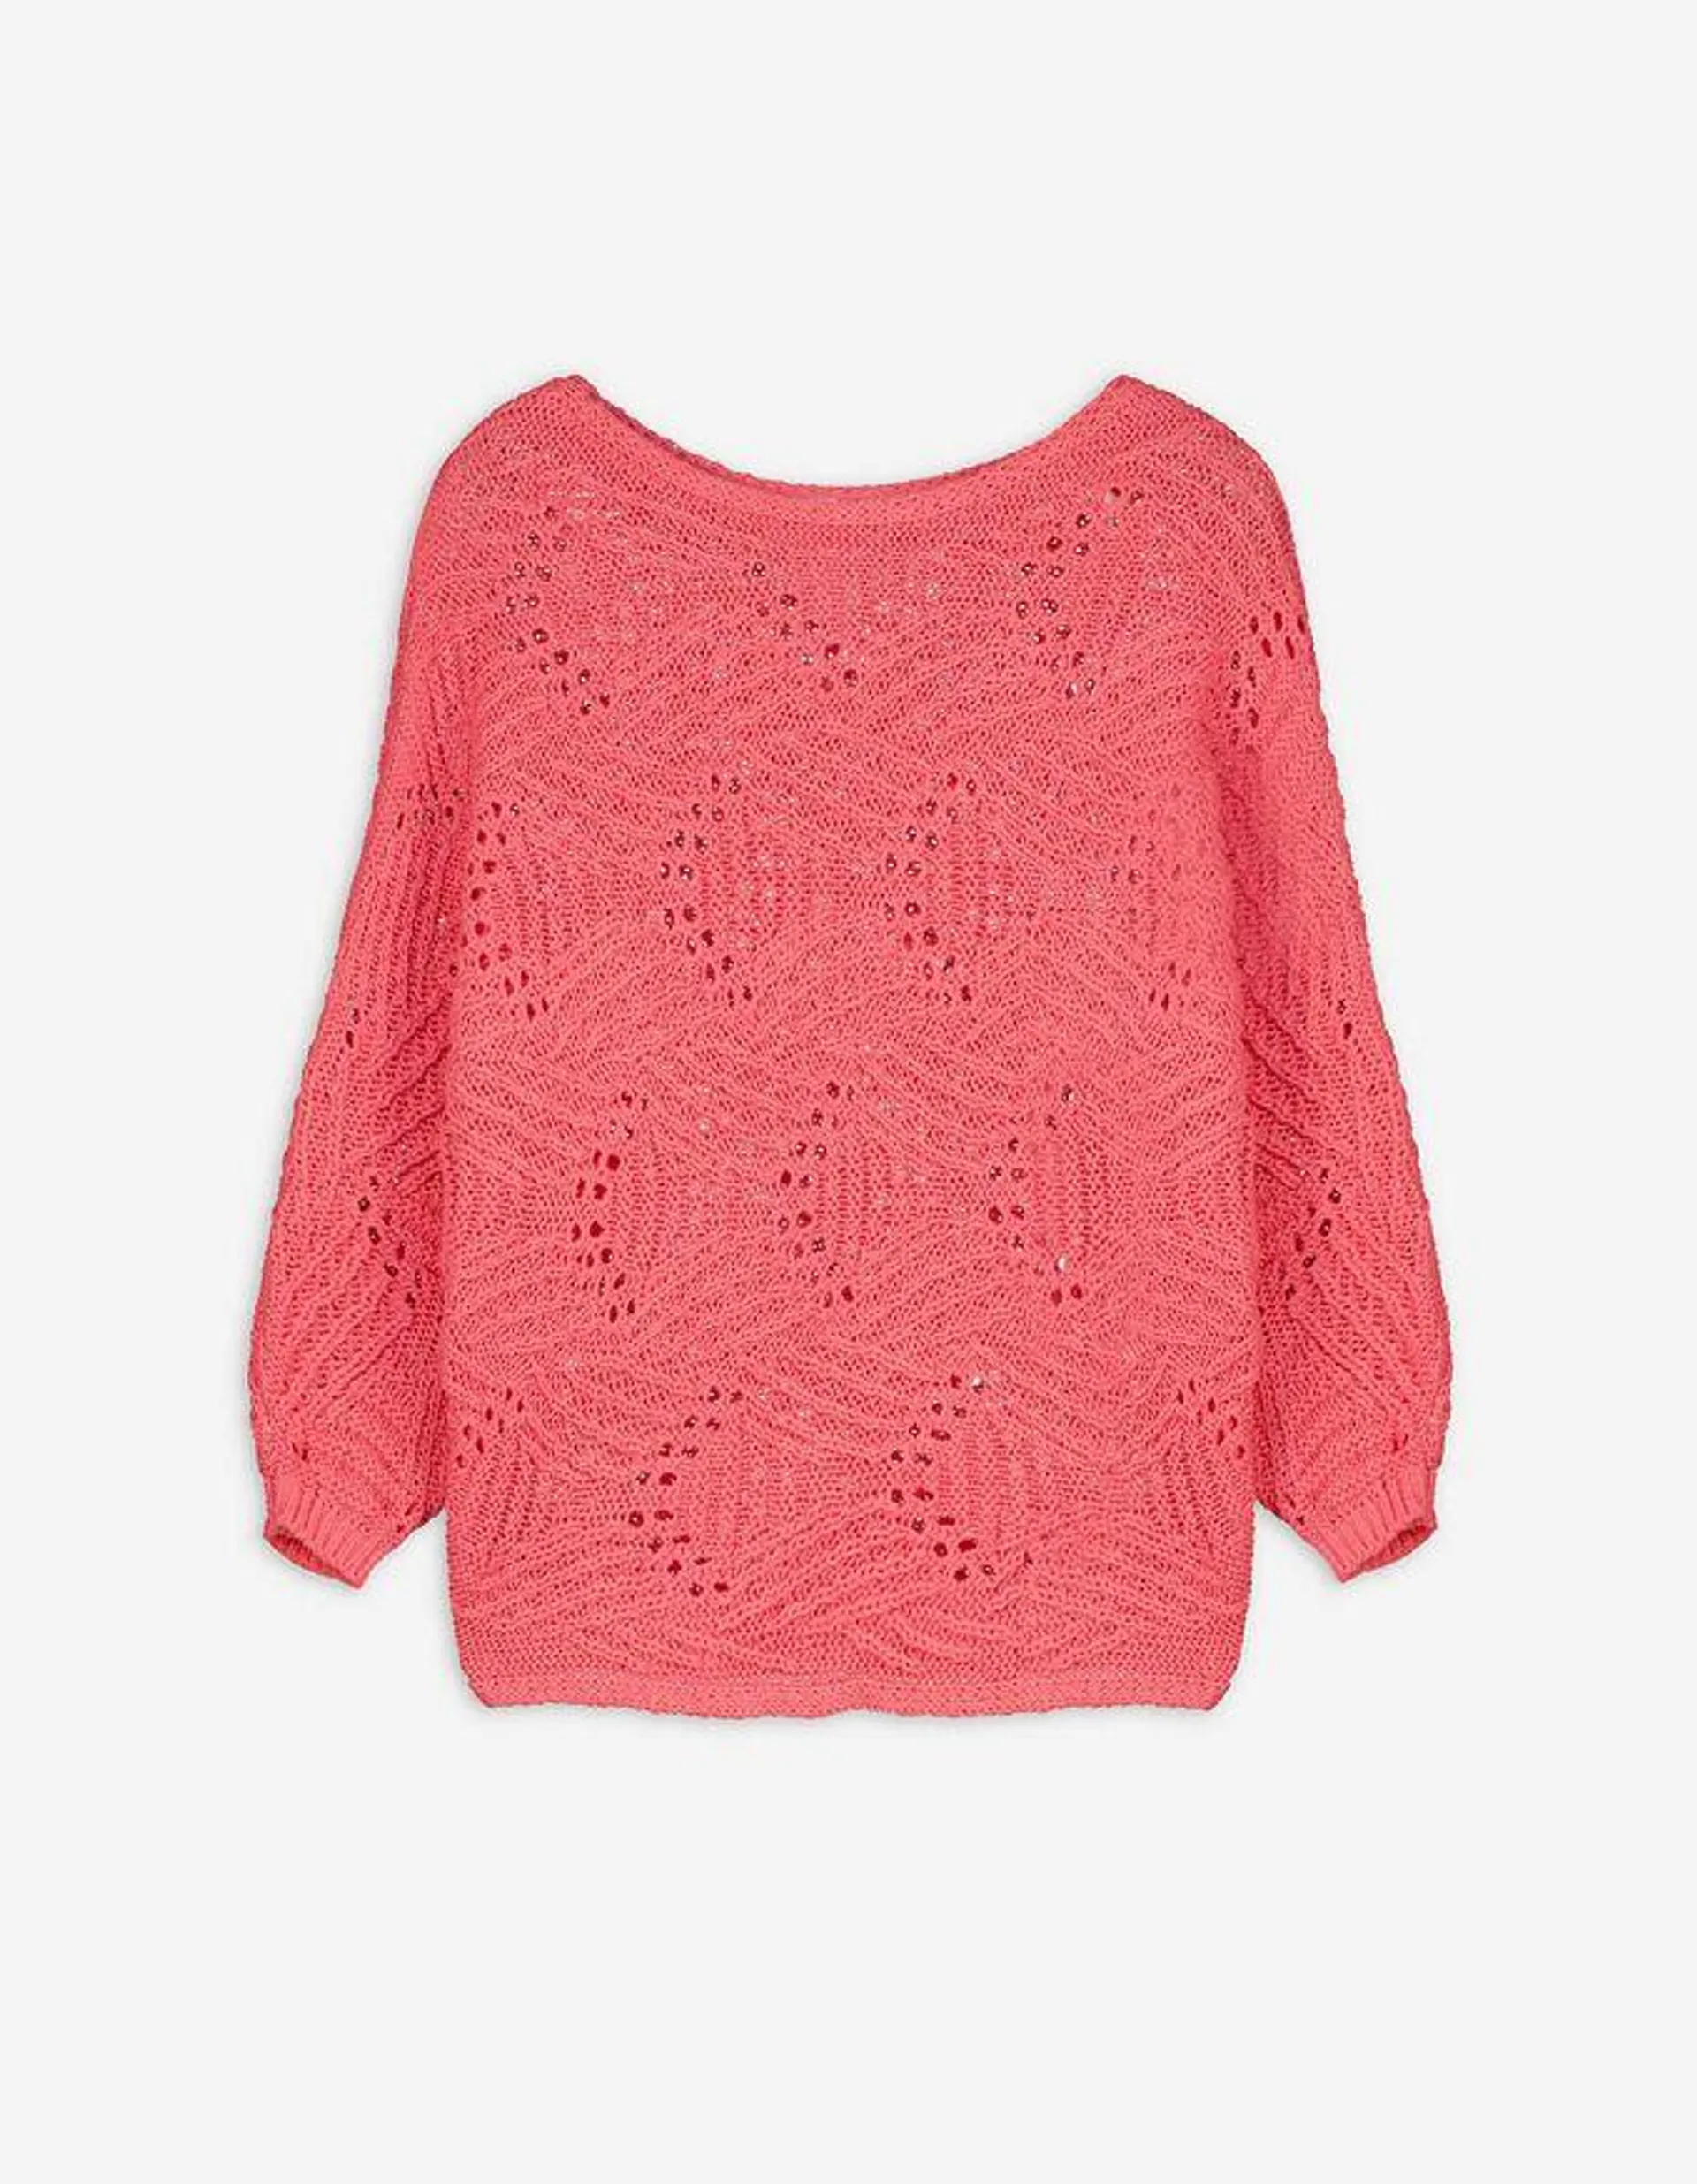 Pulover de tricot - Mâneci de liliac - Rosu deschis